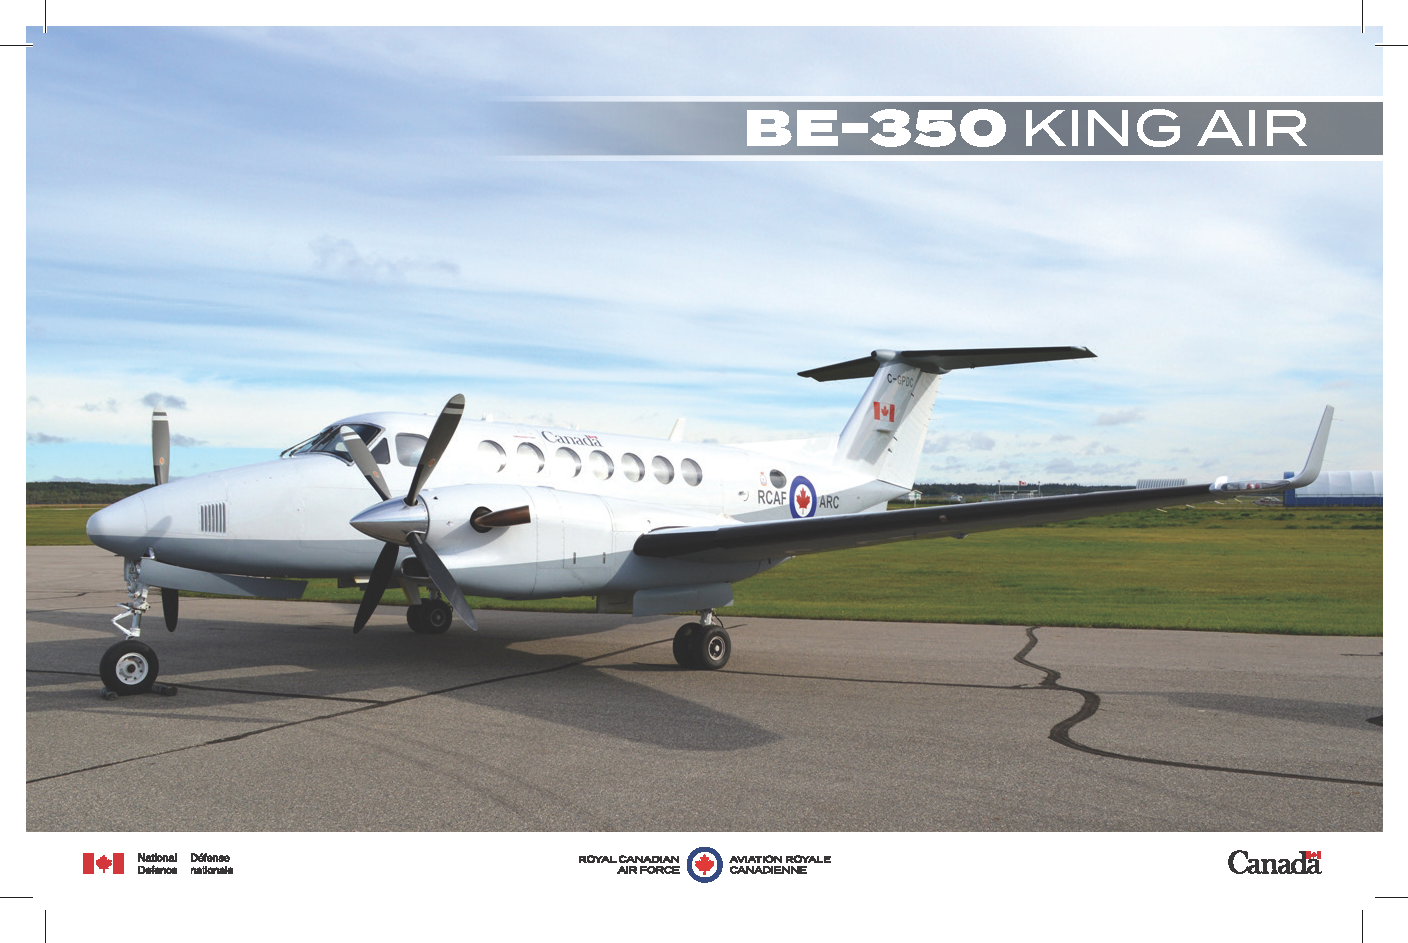 BE-350 King Air fact sheet image